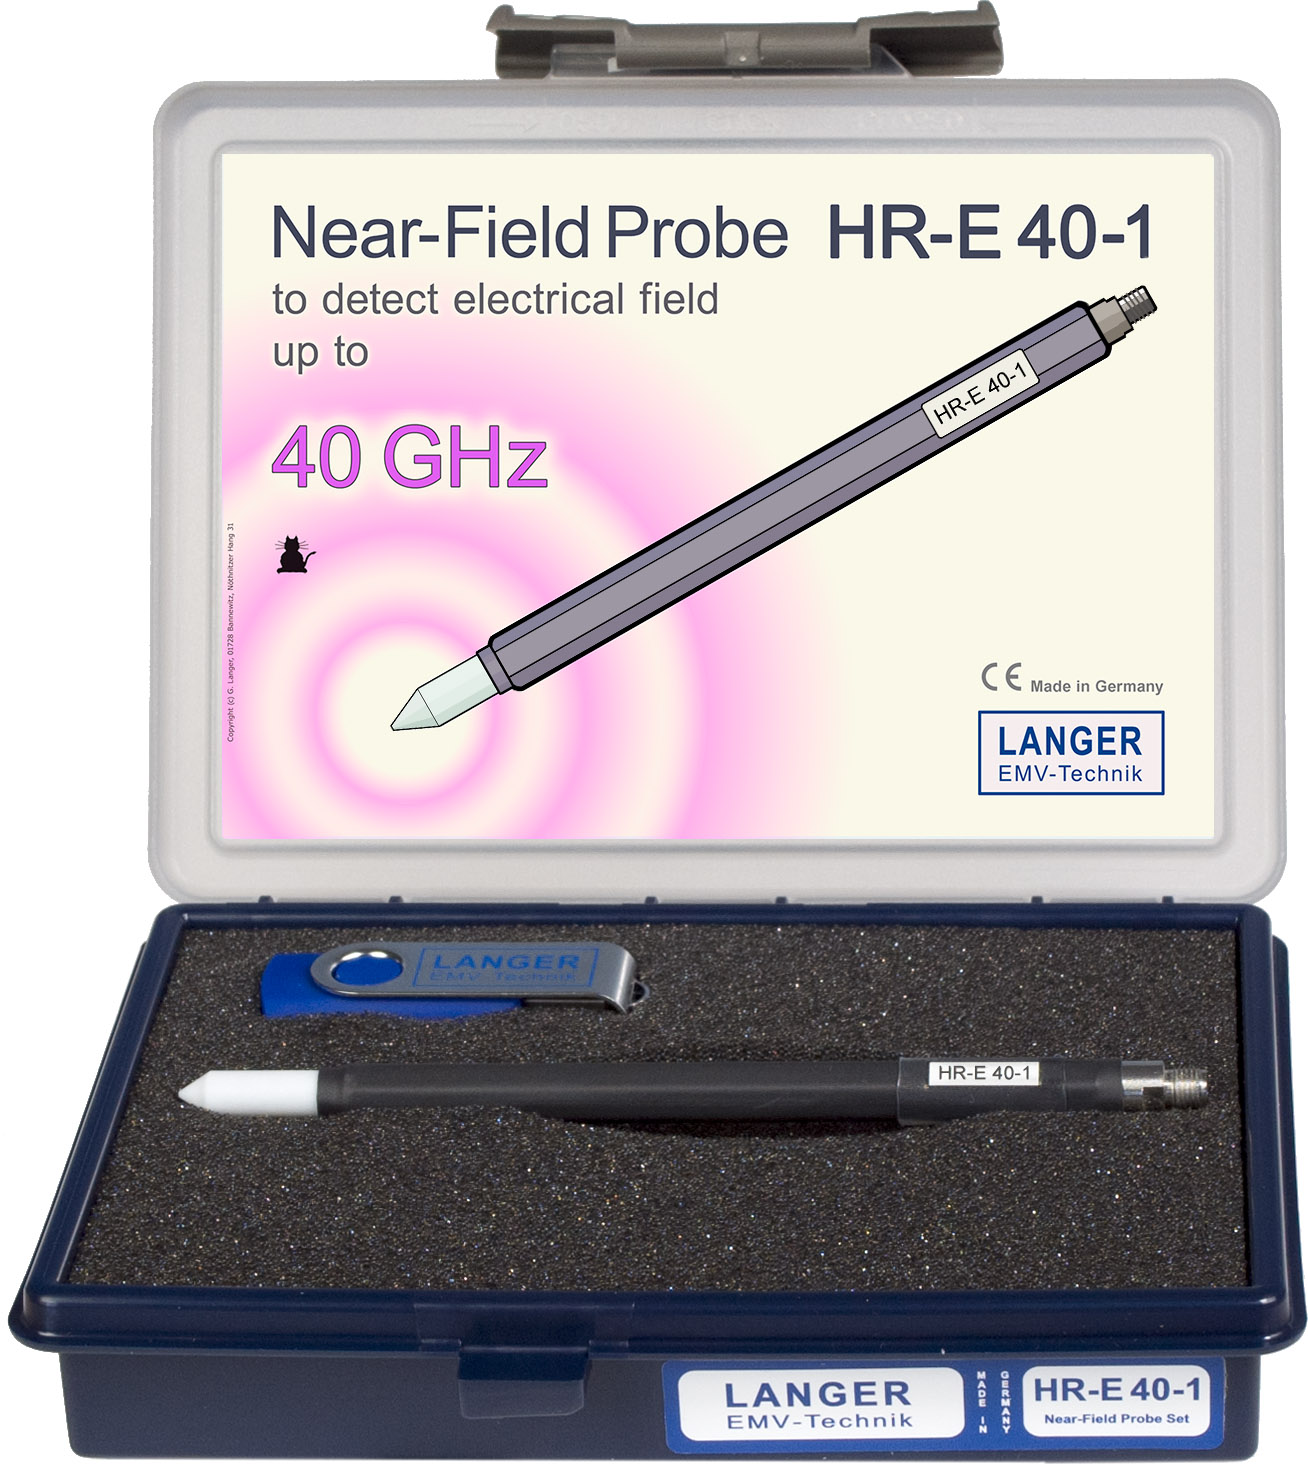 HR-E 40-1 set, Near-Field Probe Set up to 40 GHz